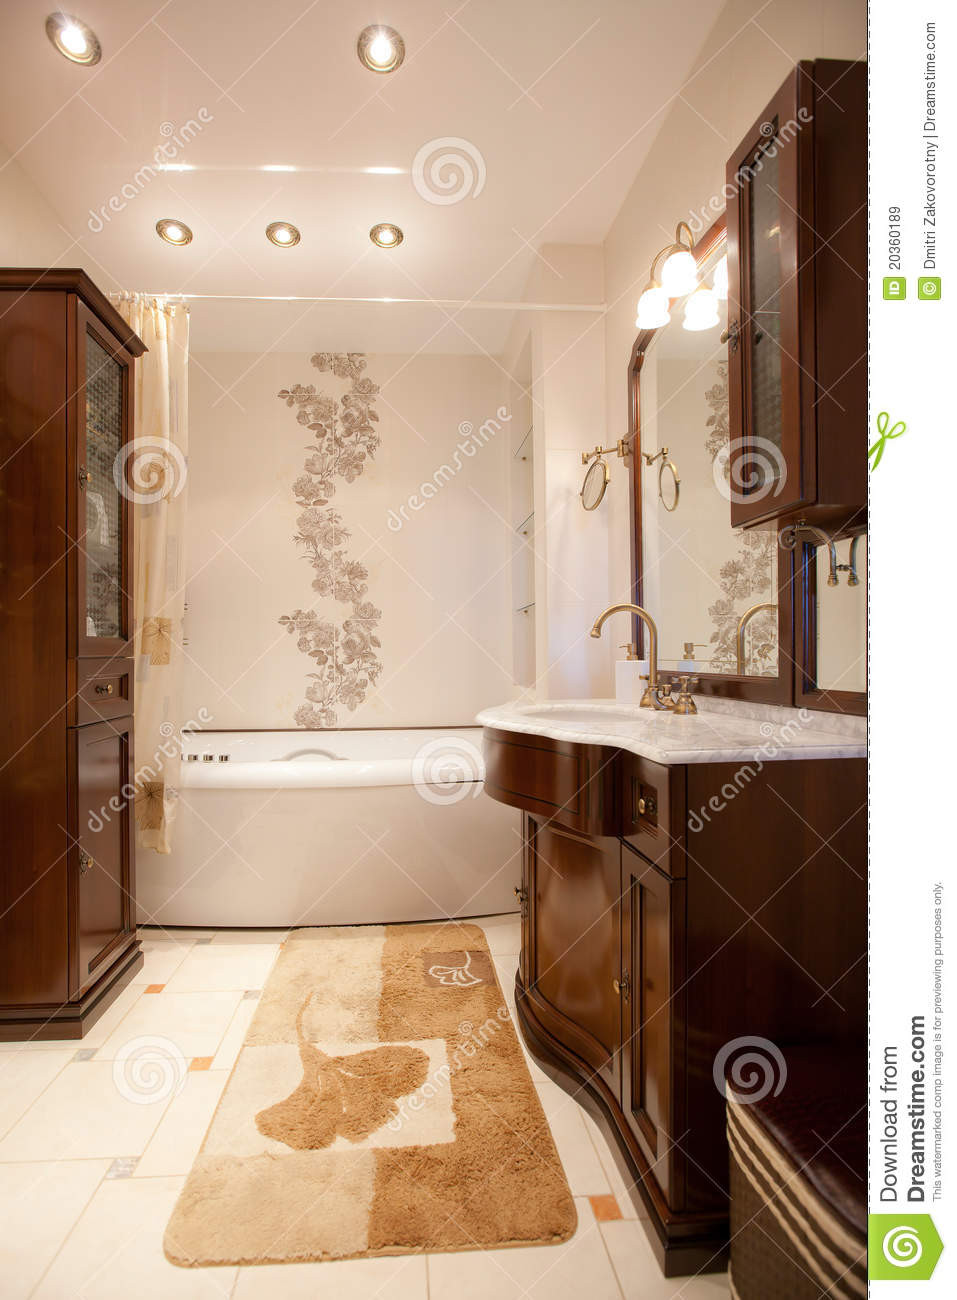 Bright Bathroom Colors
 Bathroom In Bright Colors Royalty Free Stock